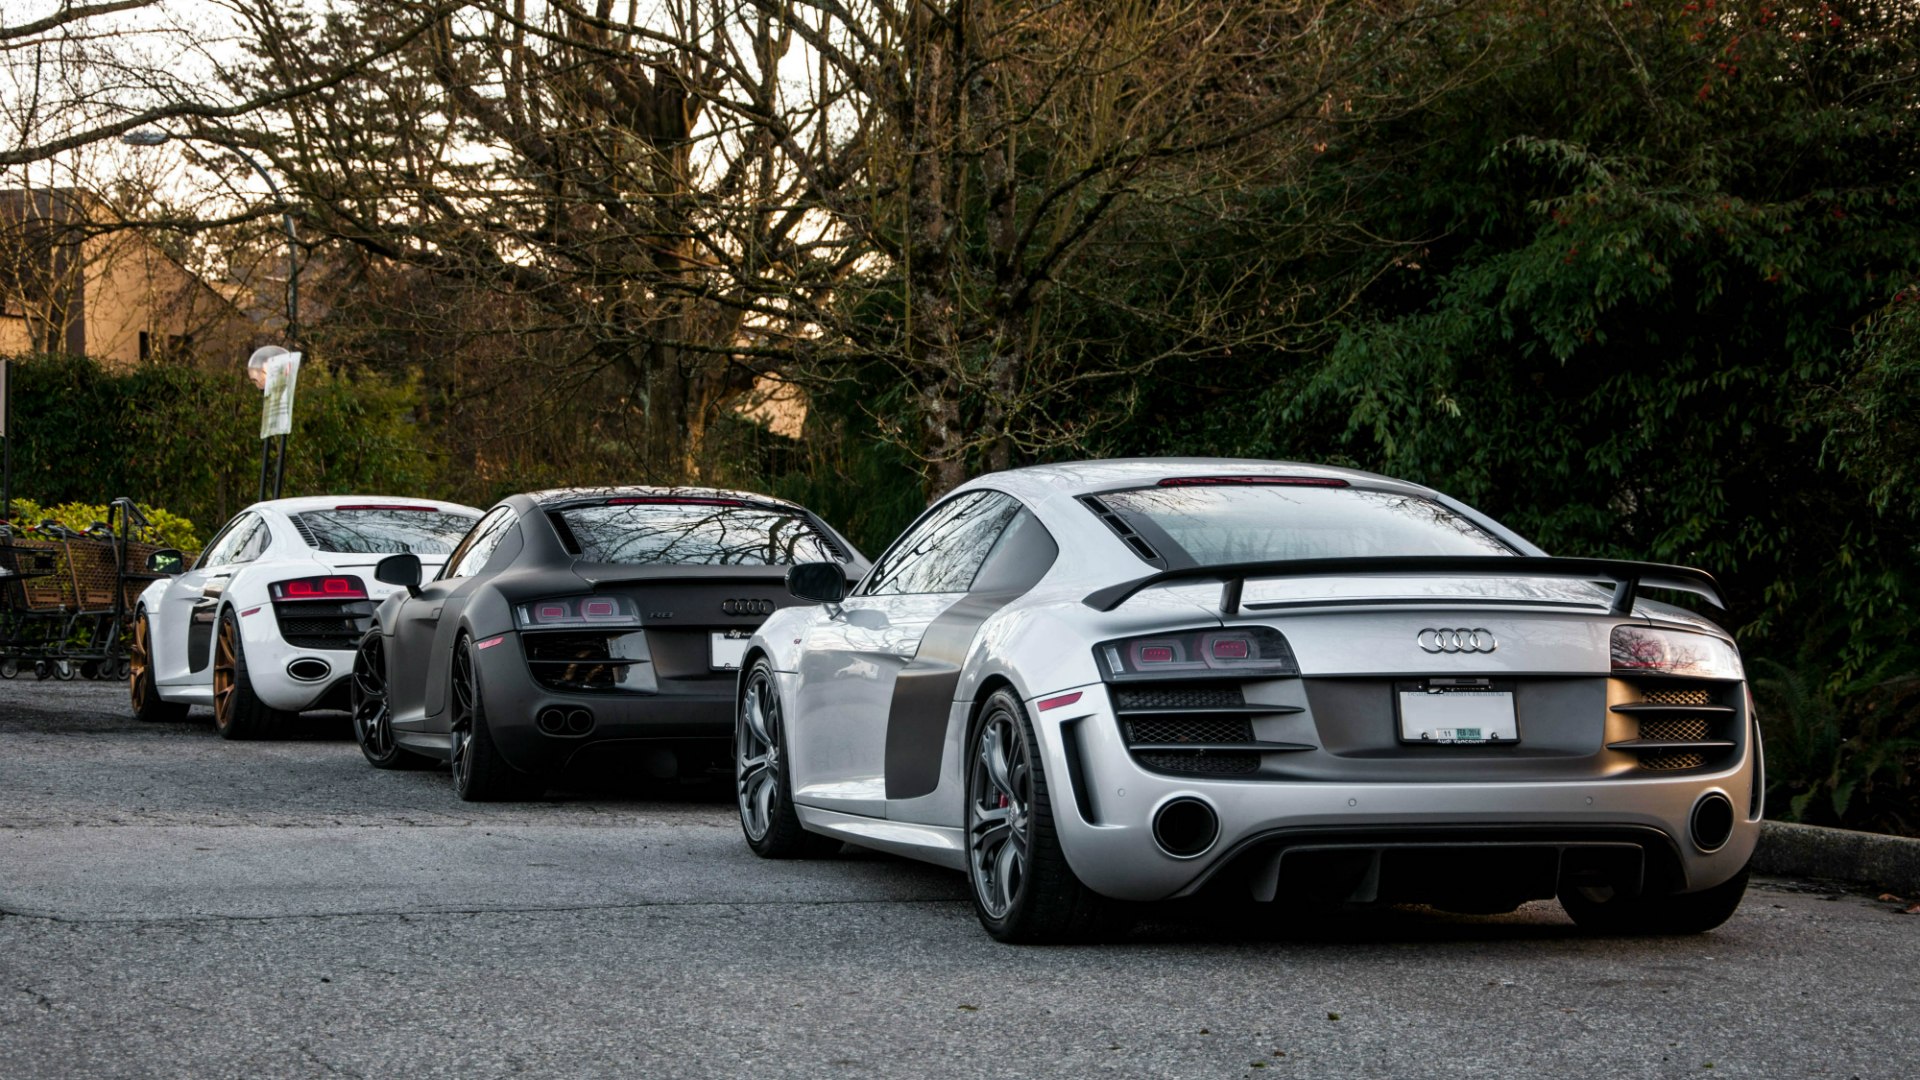 Audi r8 Black Matte. Audi Trio car. Автомобиль трио Джентера фотографии. Машина трио